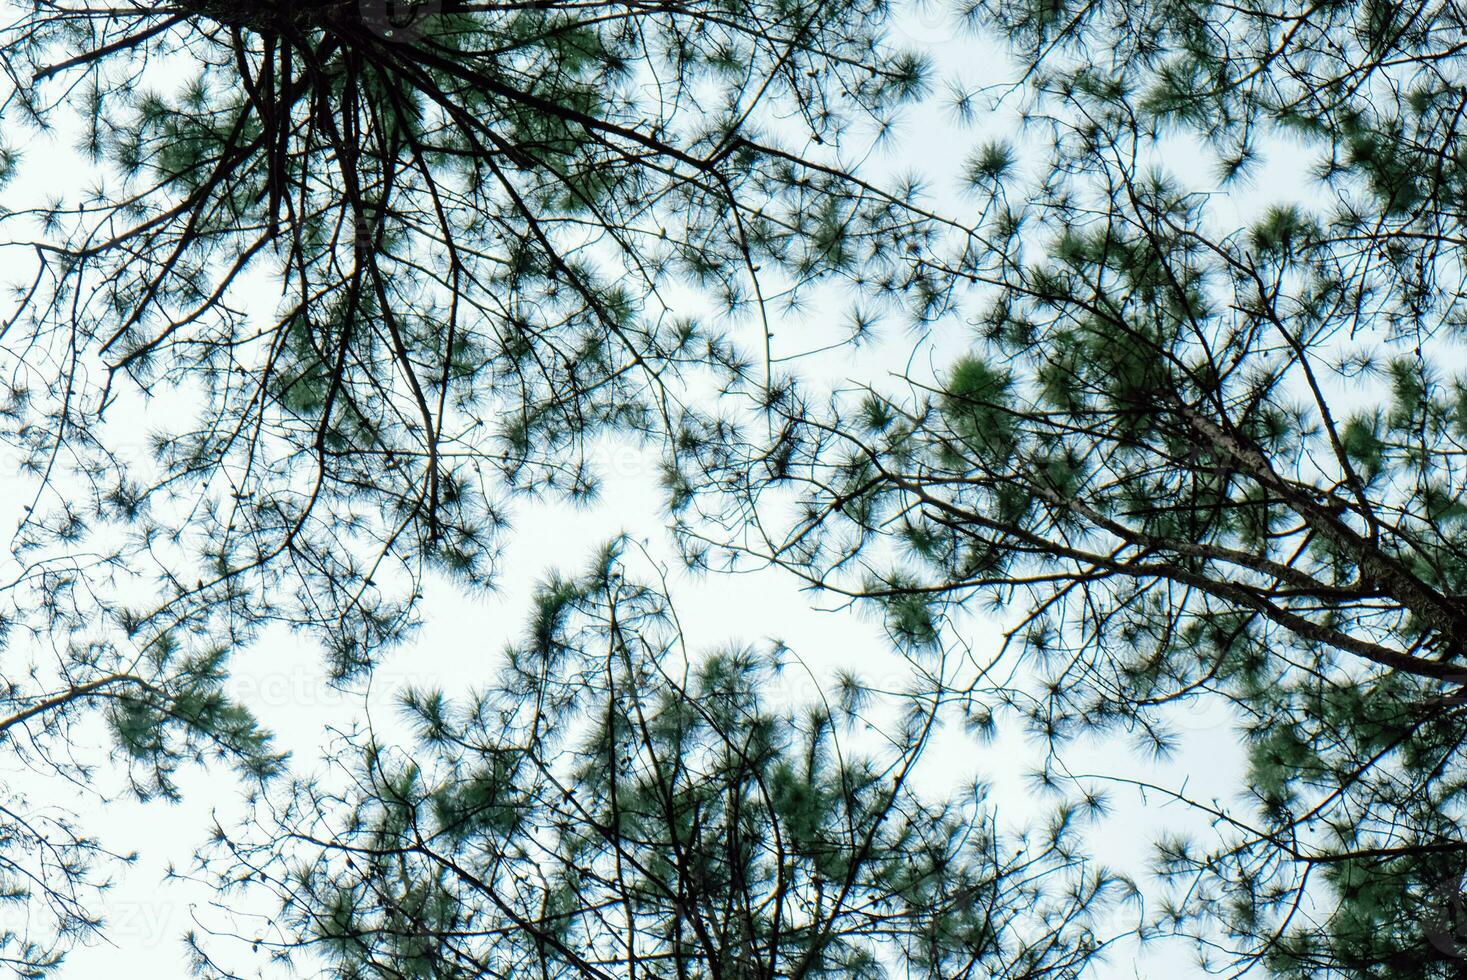 bodem visie van hoog oud bomen in groenblijvend oer Woud in natuur pijnboom park foto